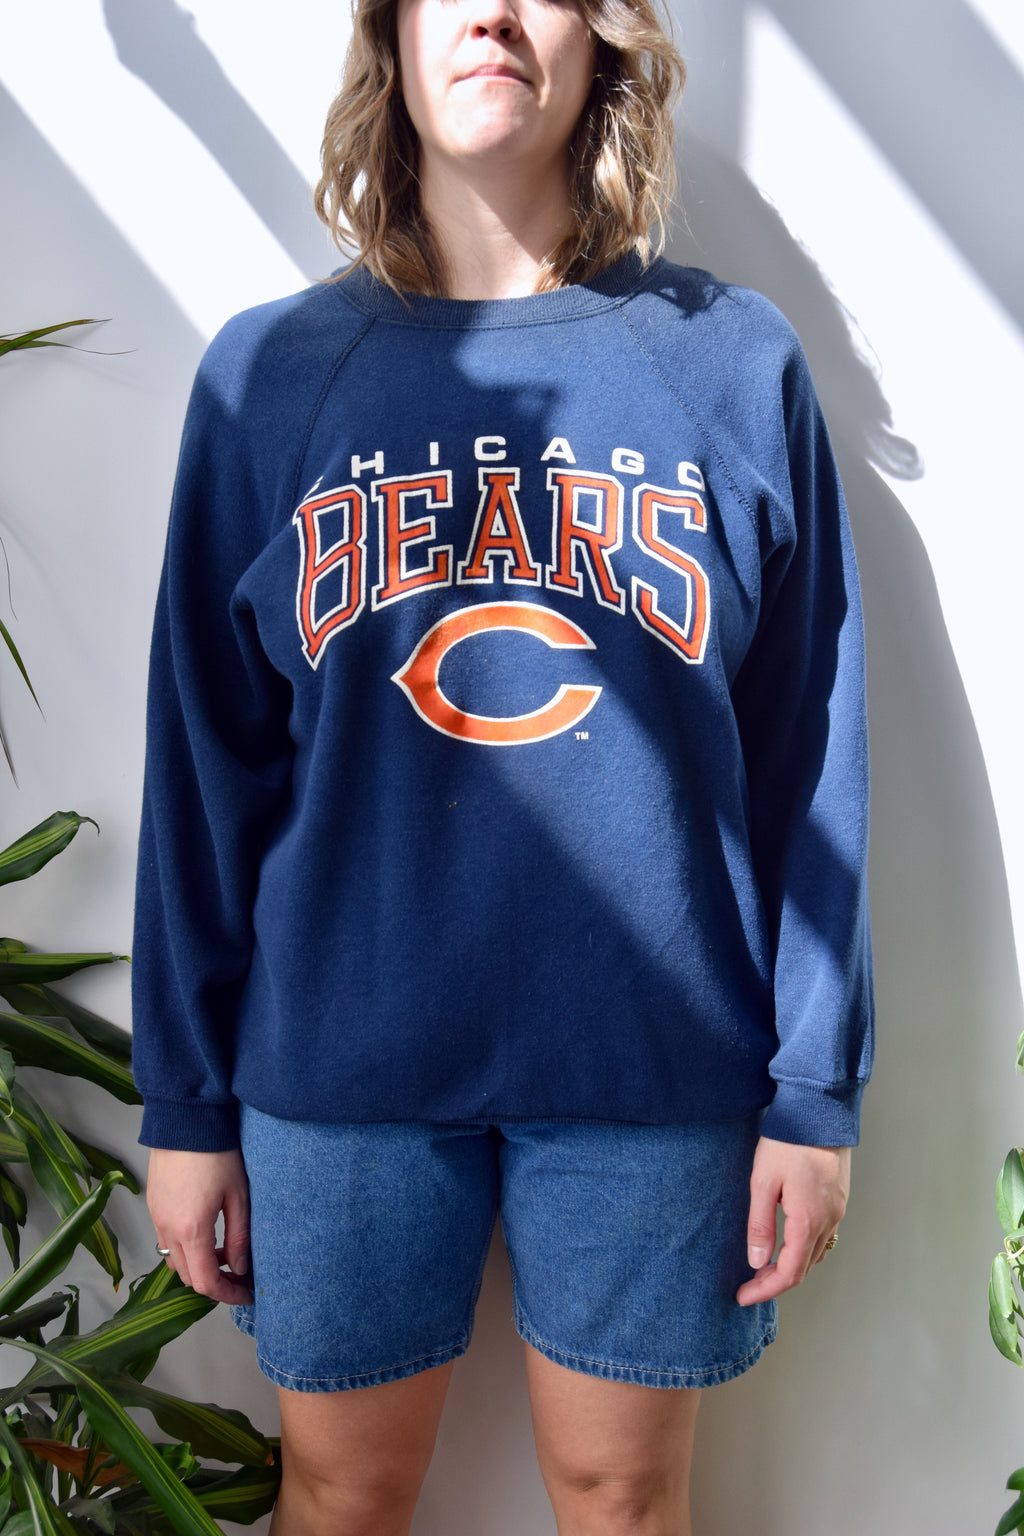 80s/90s Chicago Bears Raglan Sweatshirt